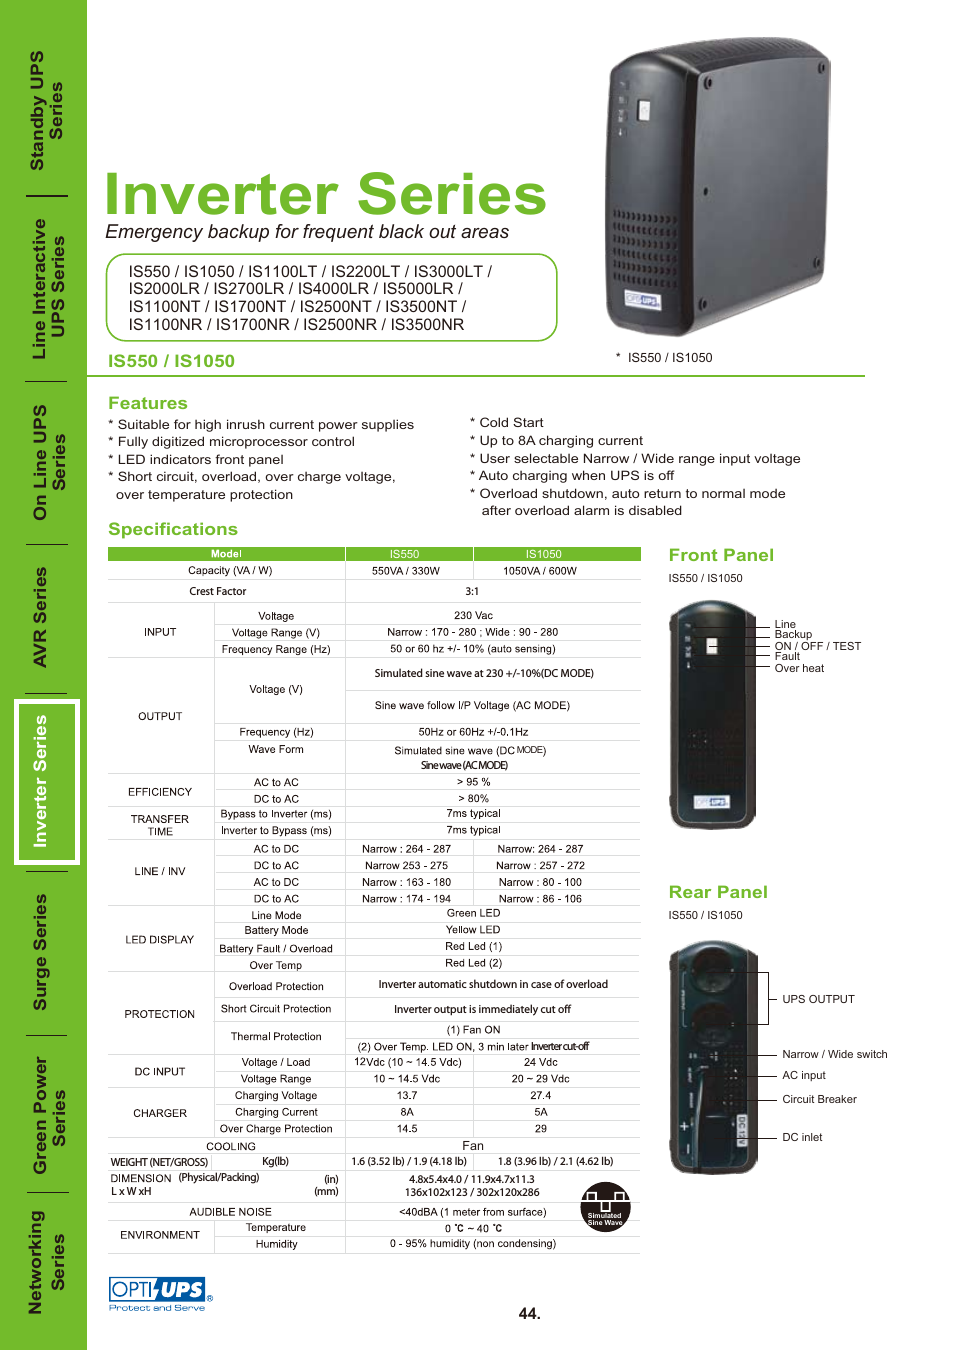 Inverter Series IS2000LR